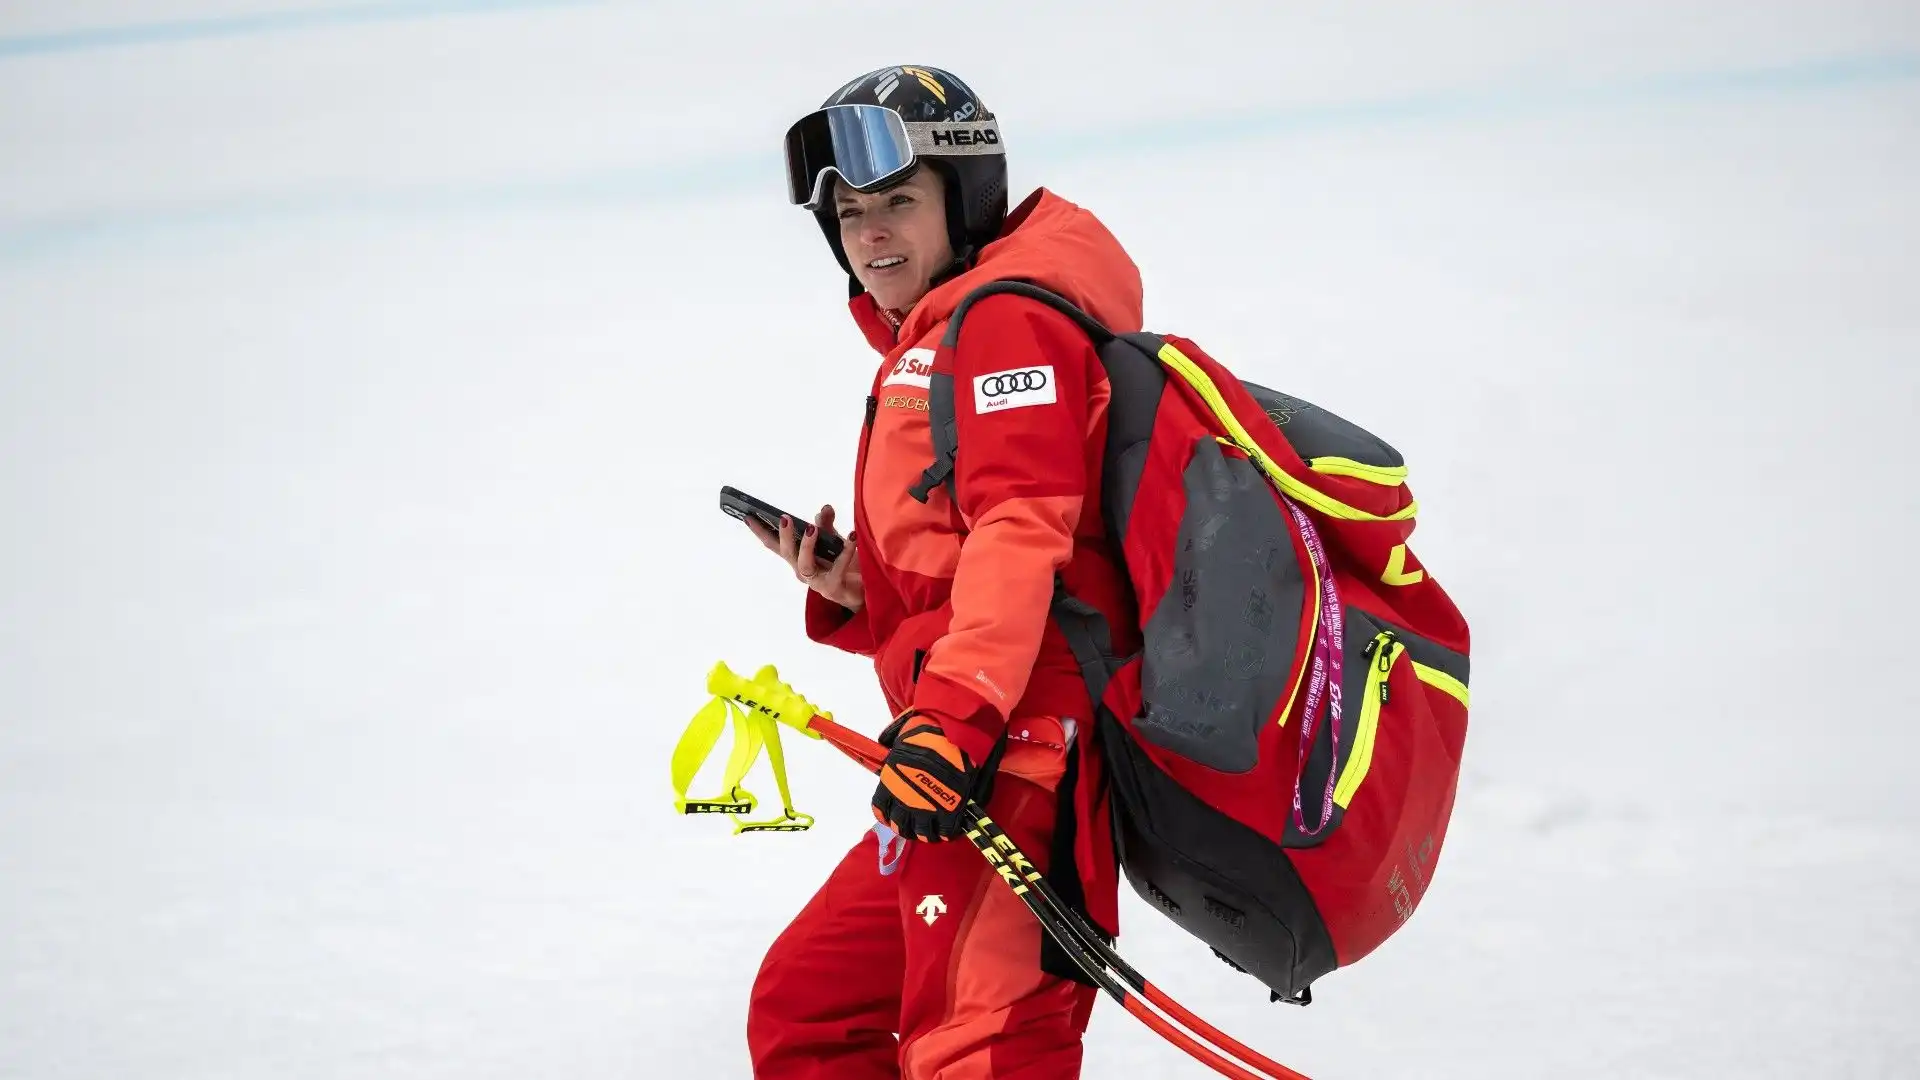 La sciatrice svizzera Lara Gut-Behrami